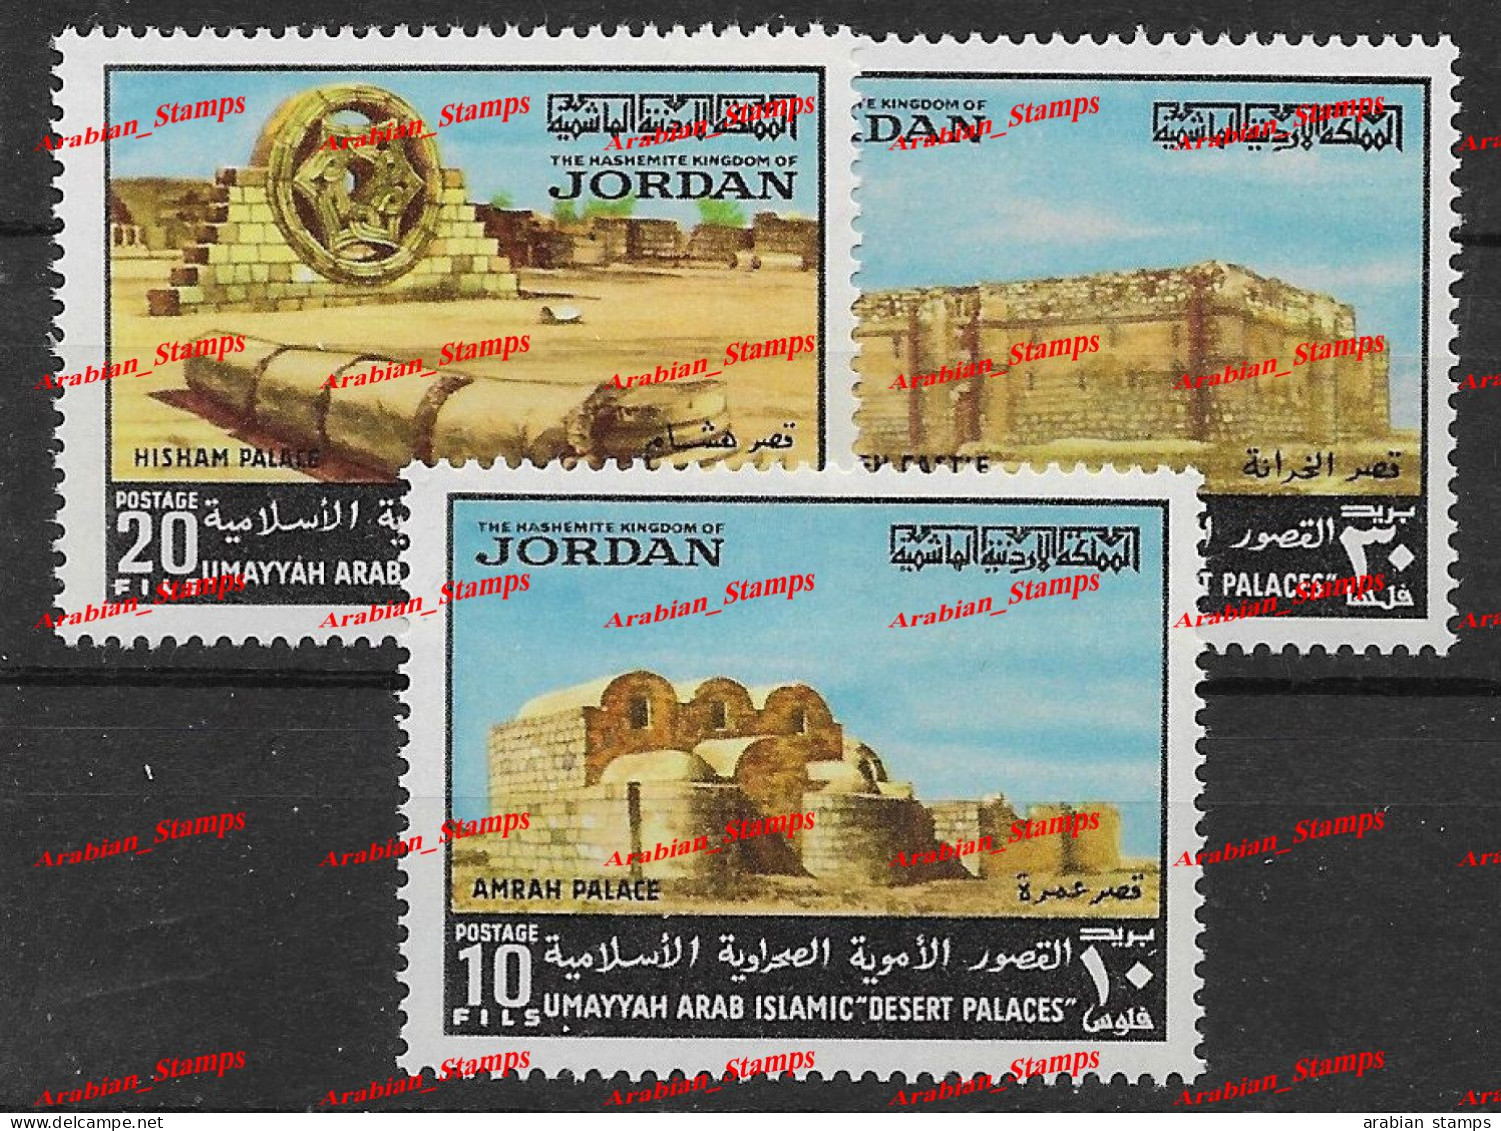 HASHIMATE KINGDOM OF JORDAN JORDANIE 1974 MNH DESERT RUINS DESERT PALACES MONUMENTS AMRA PALACE KHARRANEH CASTLE - Jordanië